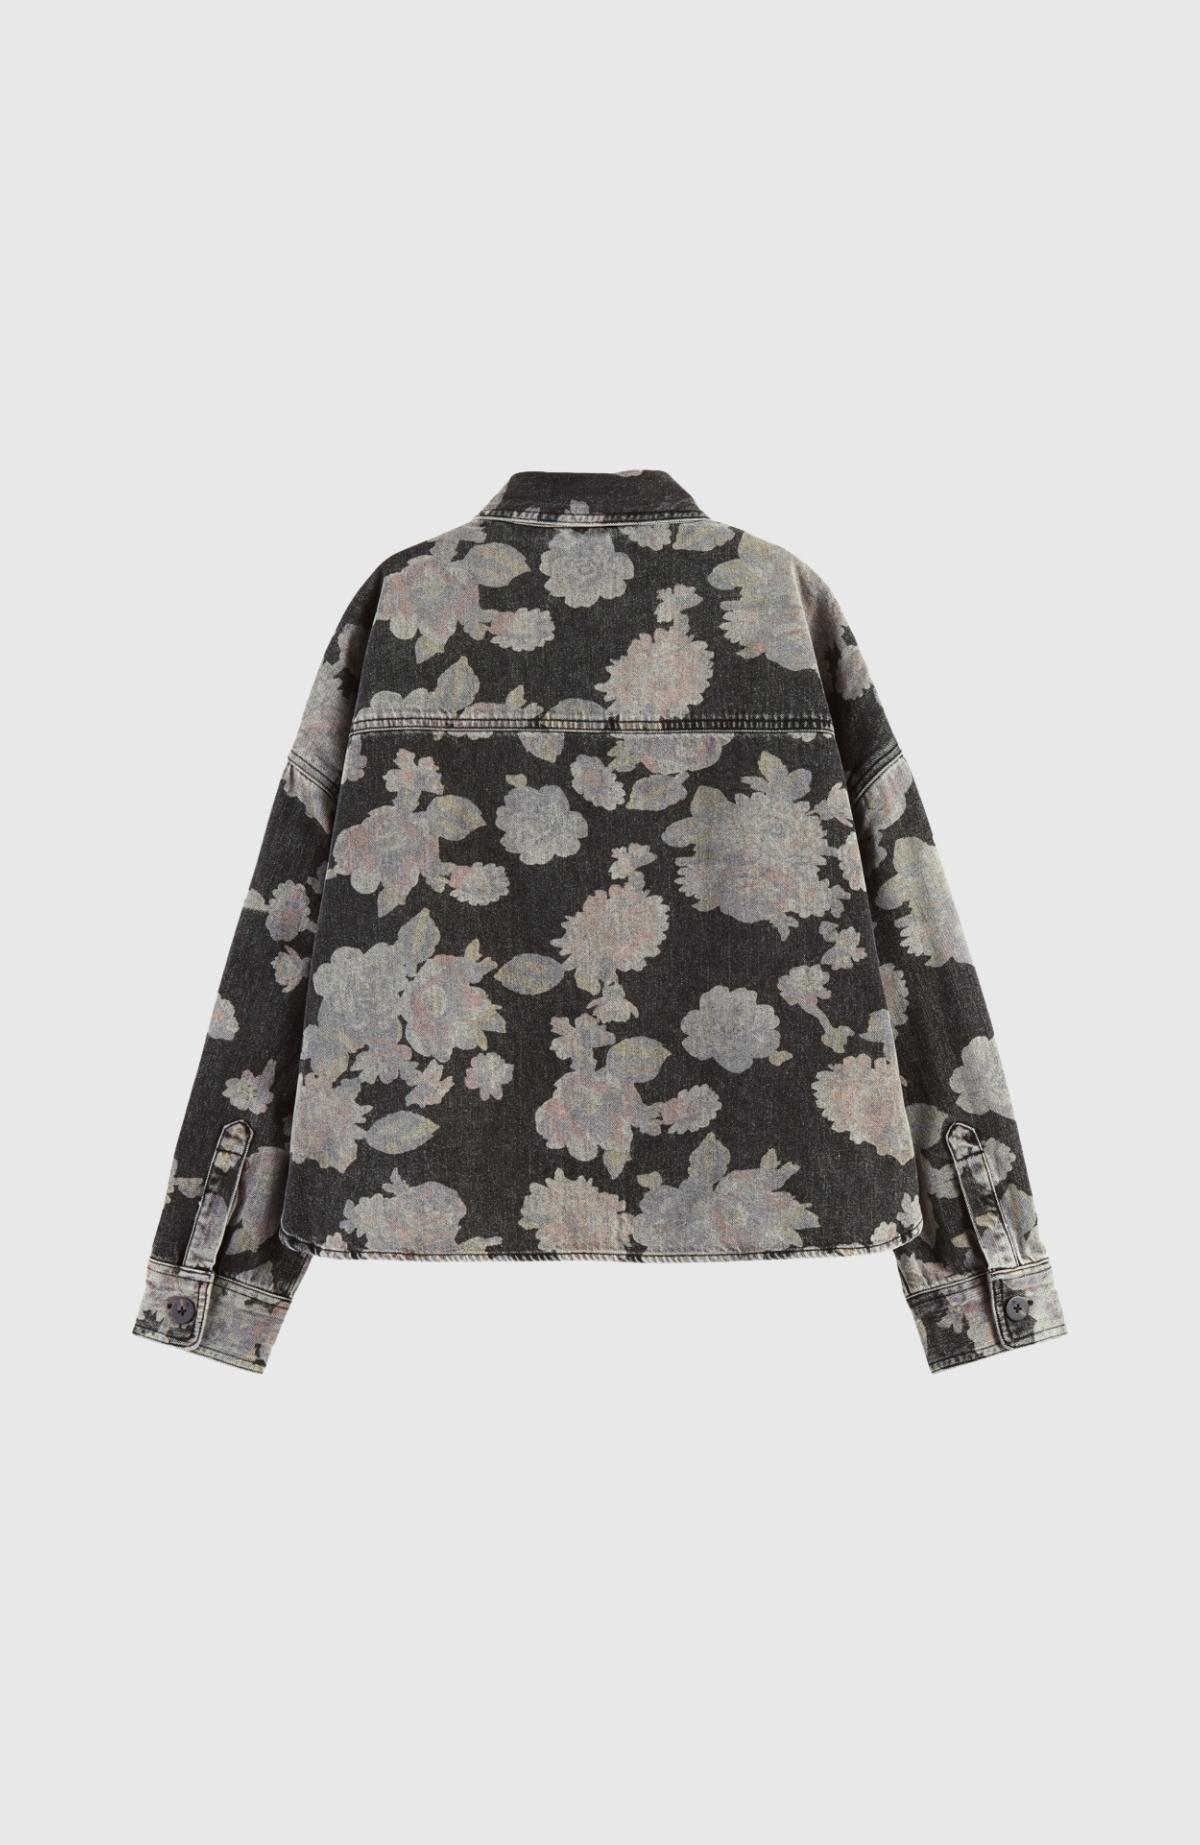 Allover printed floral black denim overshirt